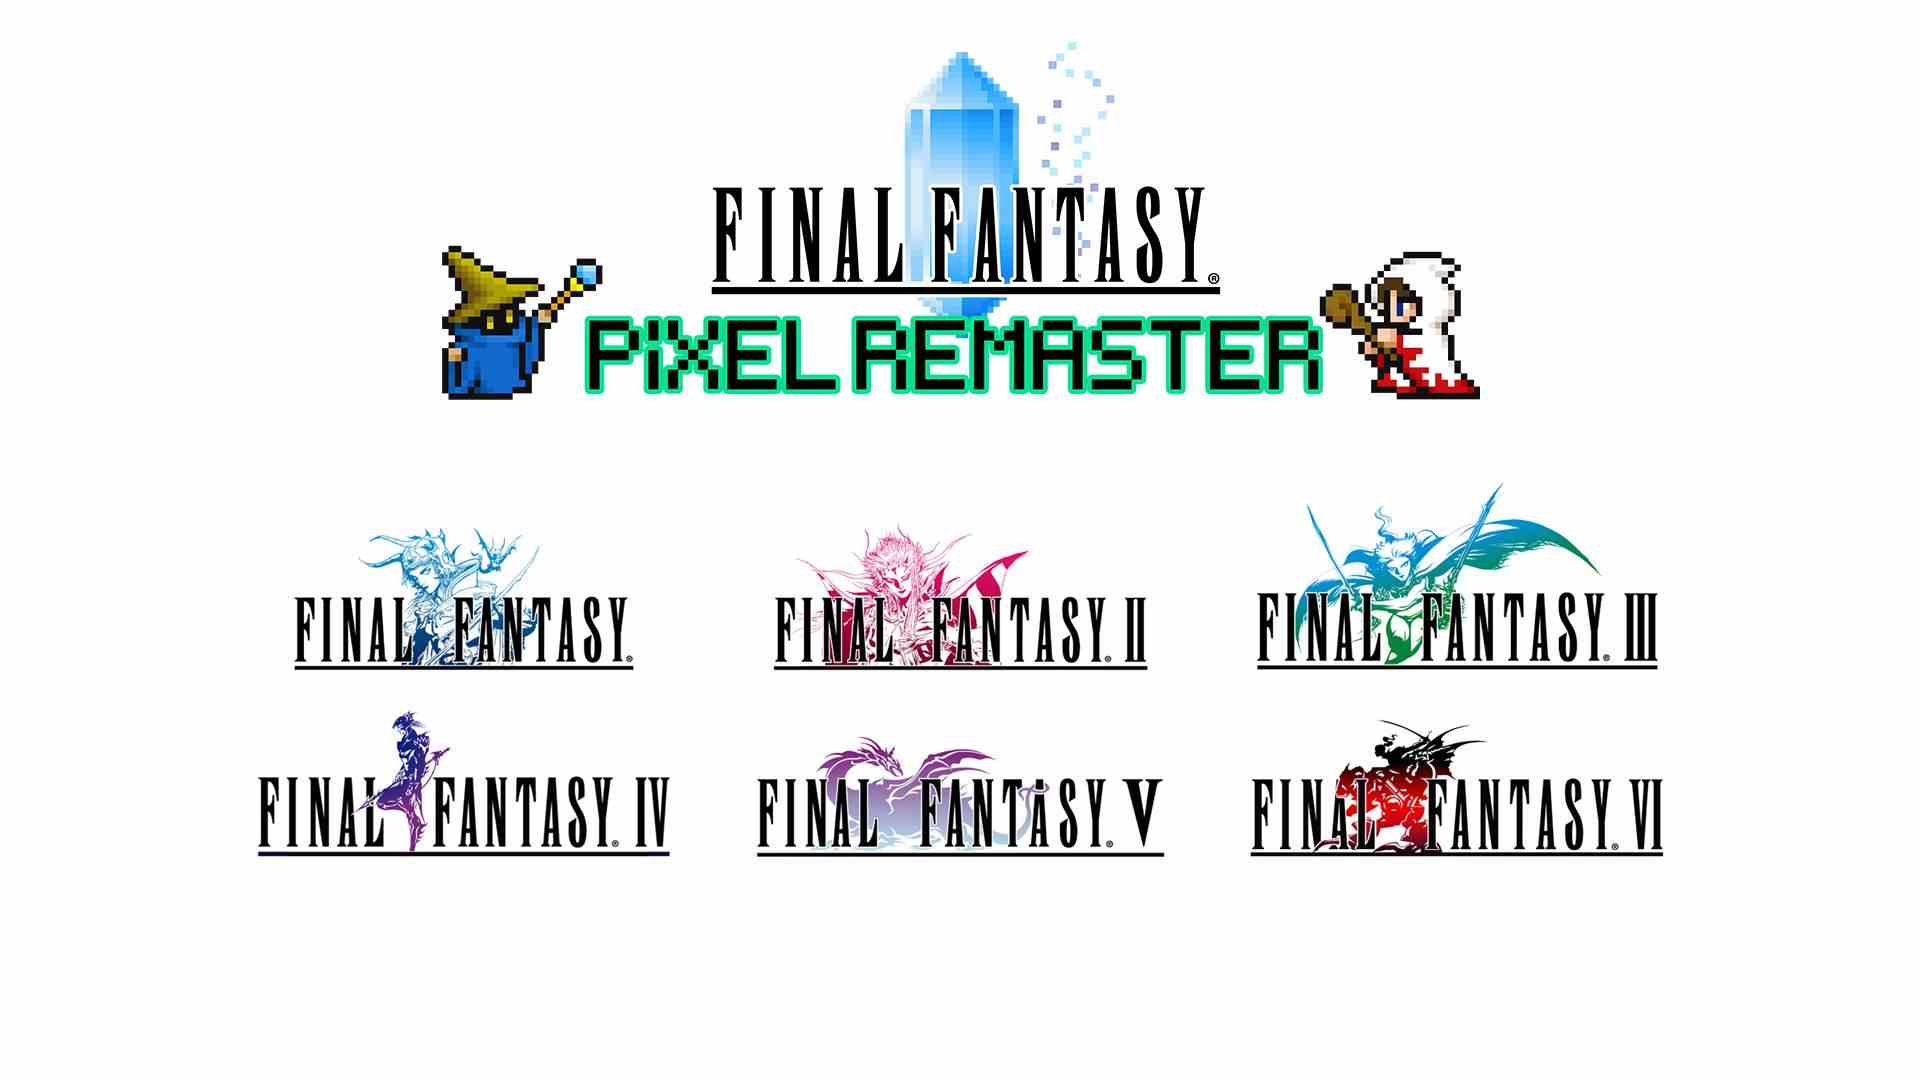 Final Fantasy Pixel-Remaster